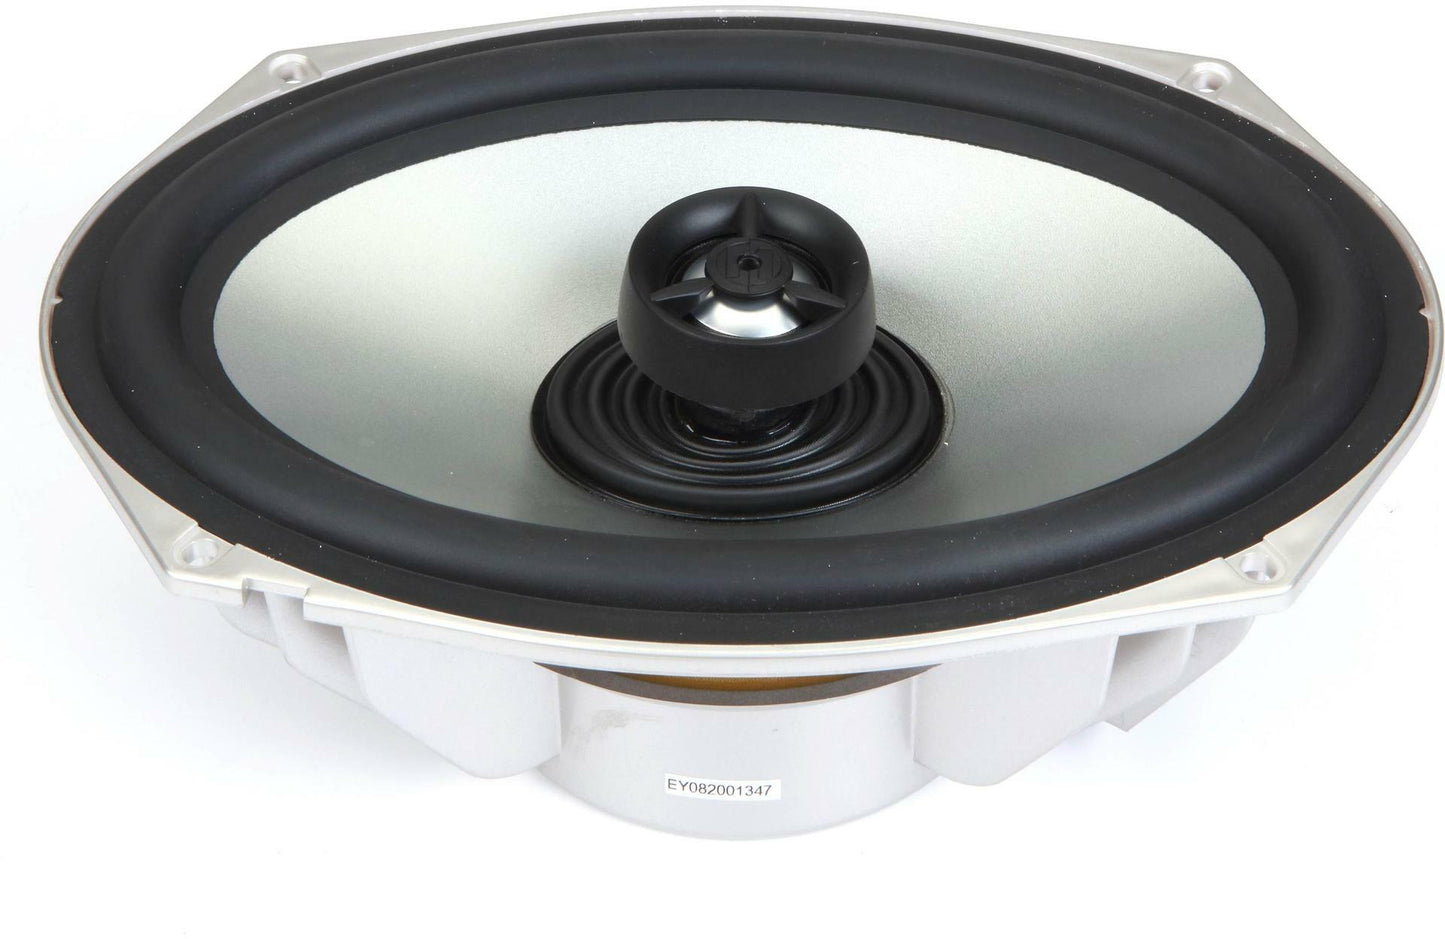 Memphis MXA69L 6 x 9" Coaxial RGB LED Speaker